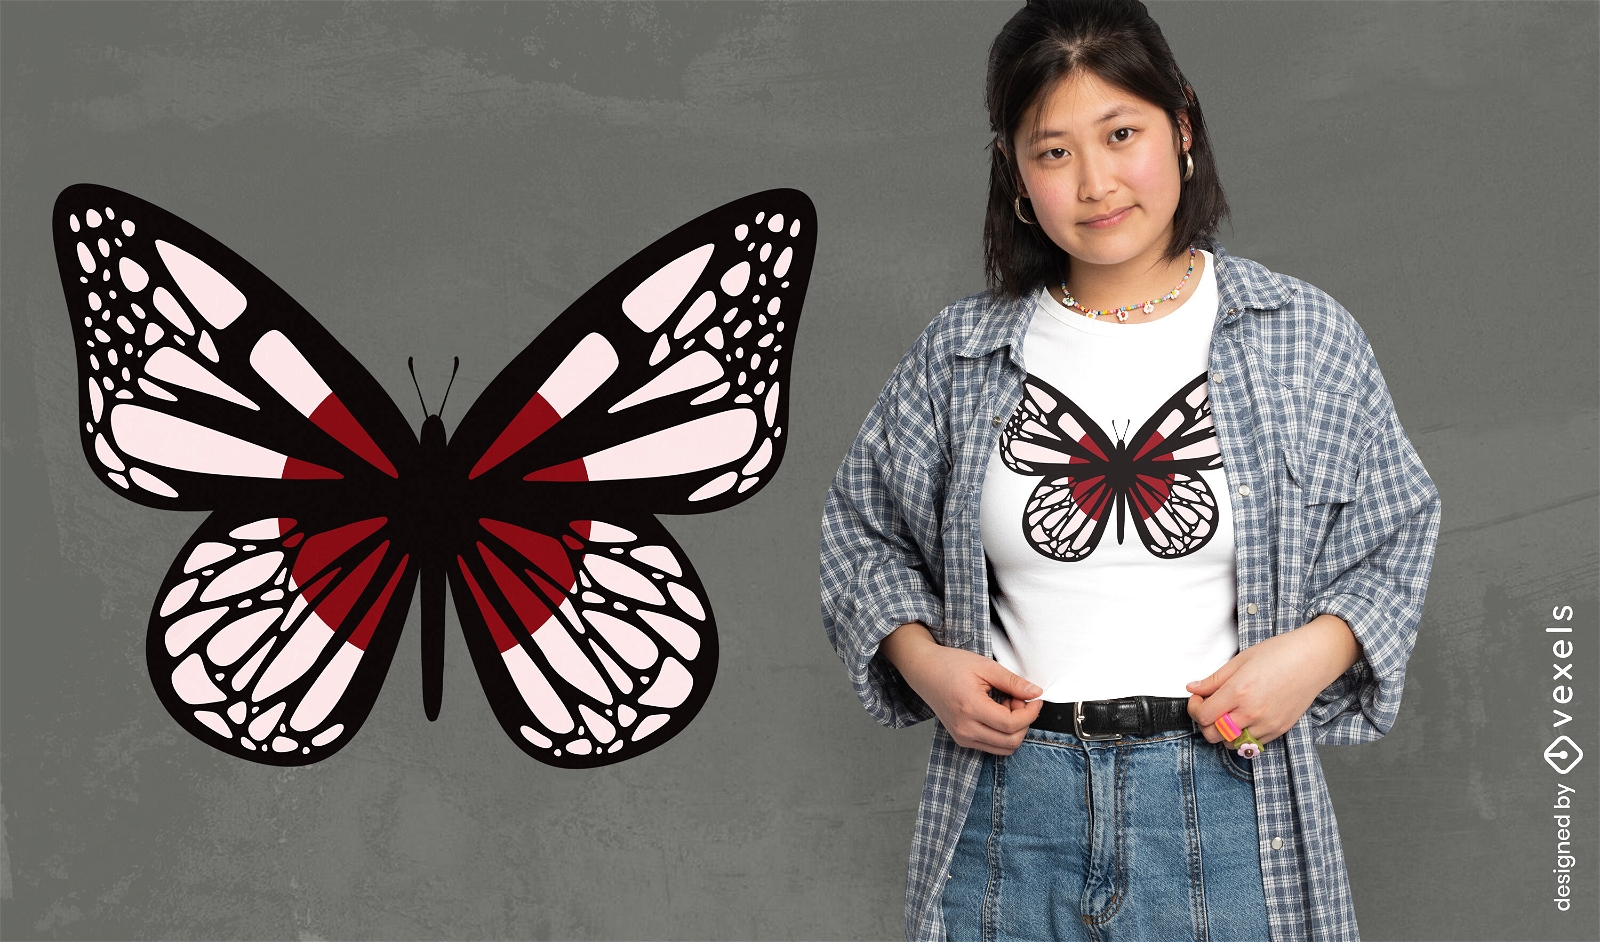 Dise?o de camiseta de mariposa japonesa.